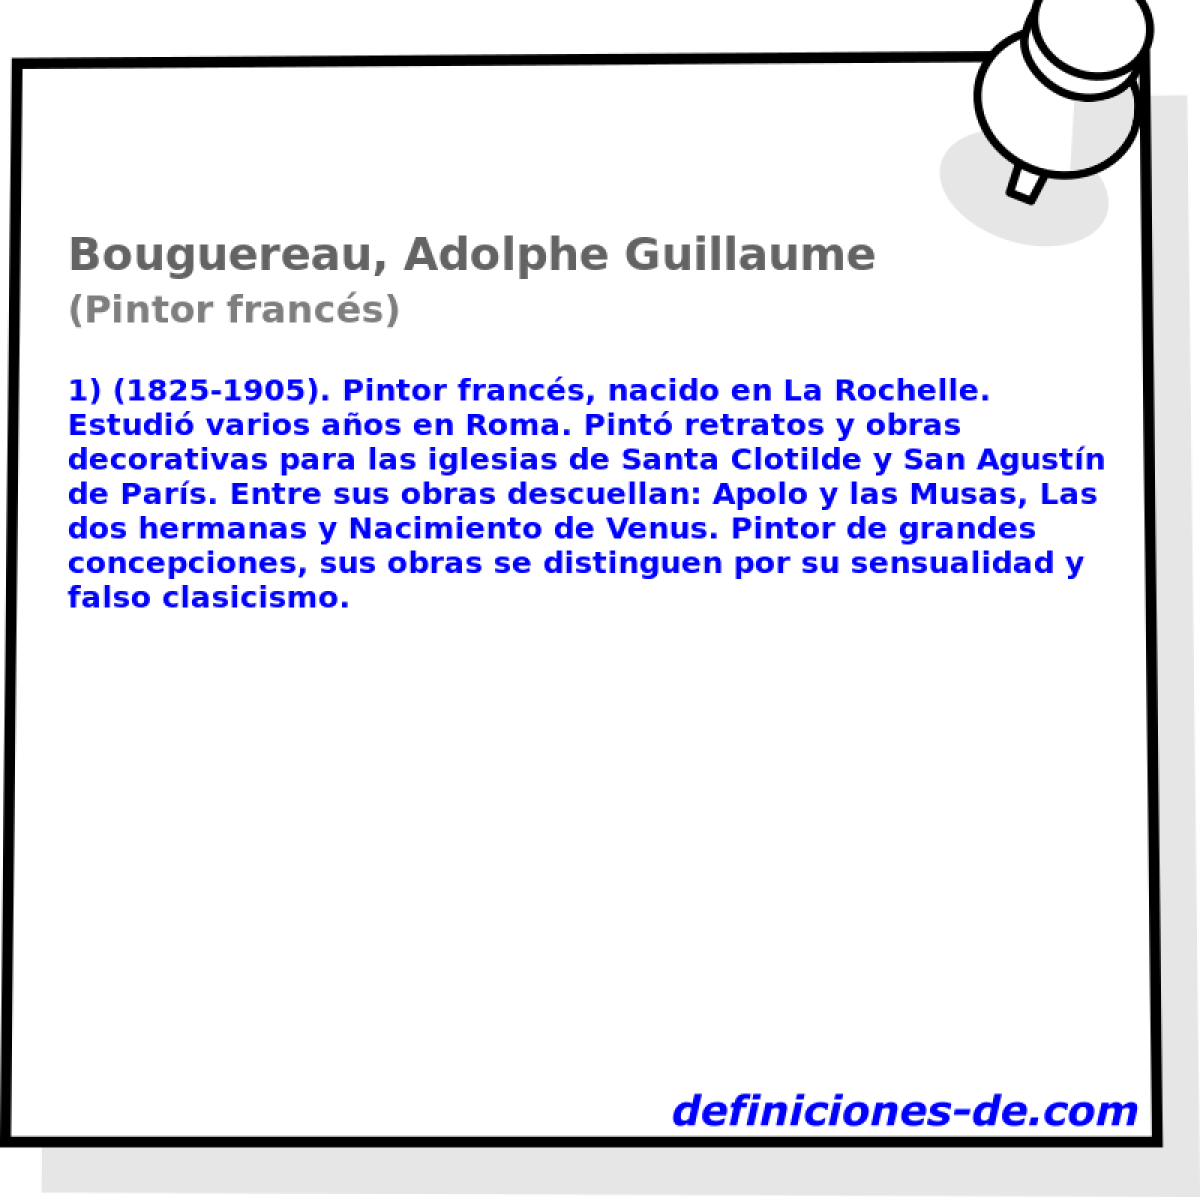 Bouguereau, Adolphe Guillaume (Pintor francs)